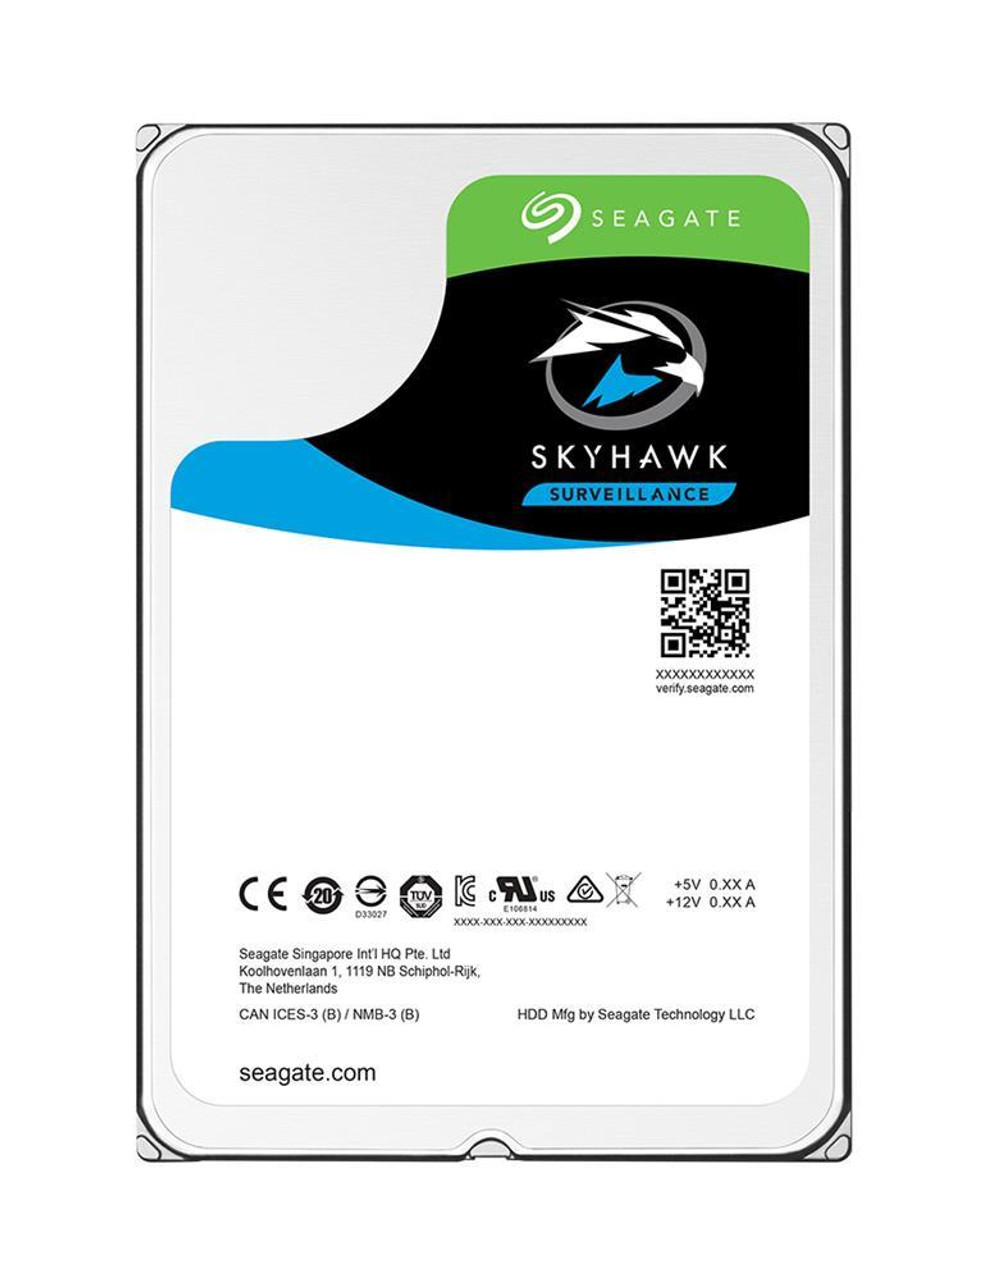 ST3000VX009-25PK Seagate SkyHawk Surveillance 3TB 5900RPM SATA 6Gbps 256MB Cache 3.5-inch Internal Hard Drive (25-Pack)